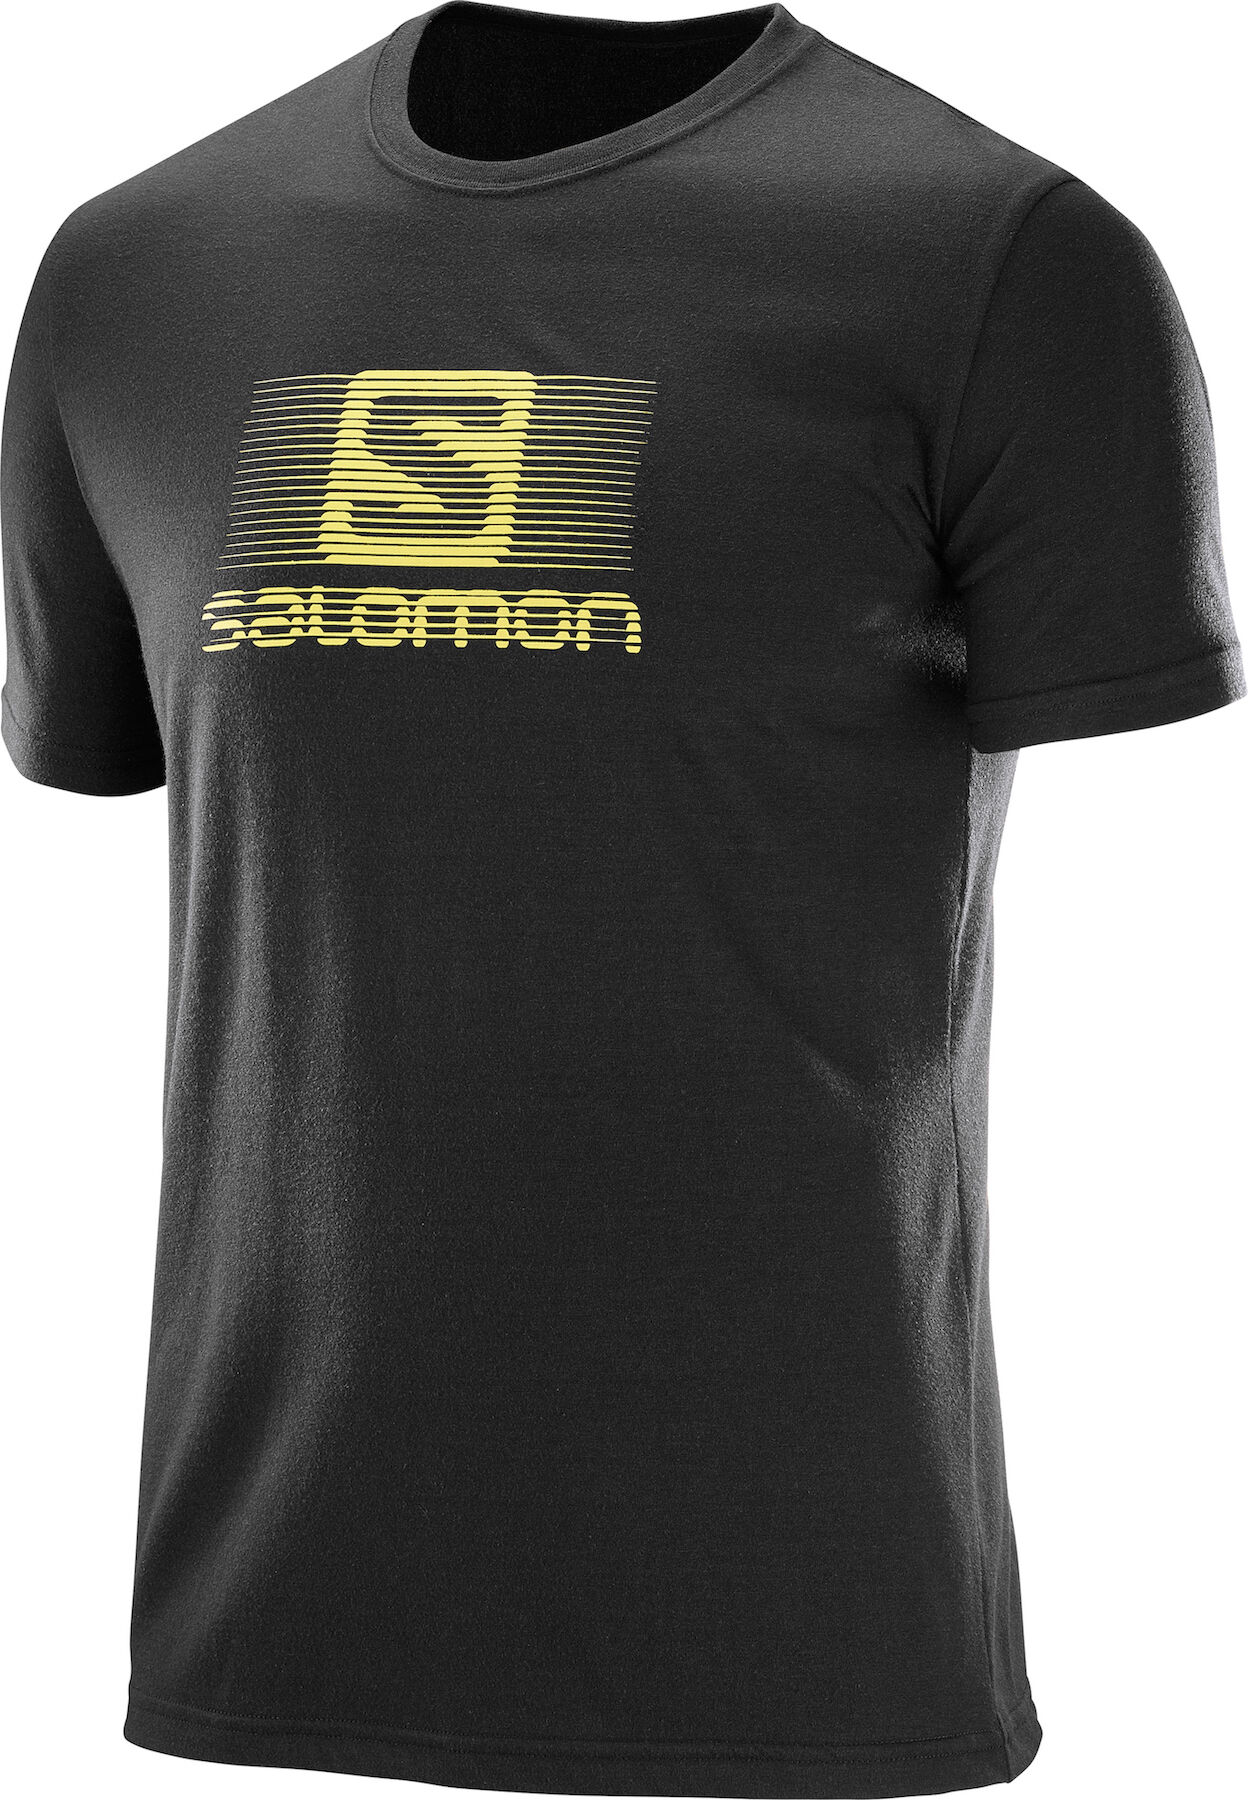 Salomon - Blend Logo - Camiseta - Hombre